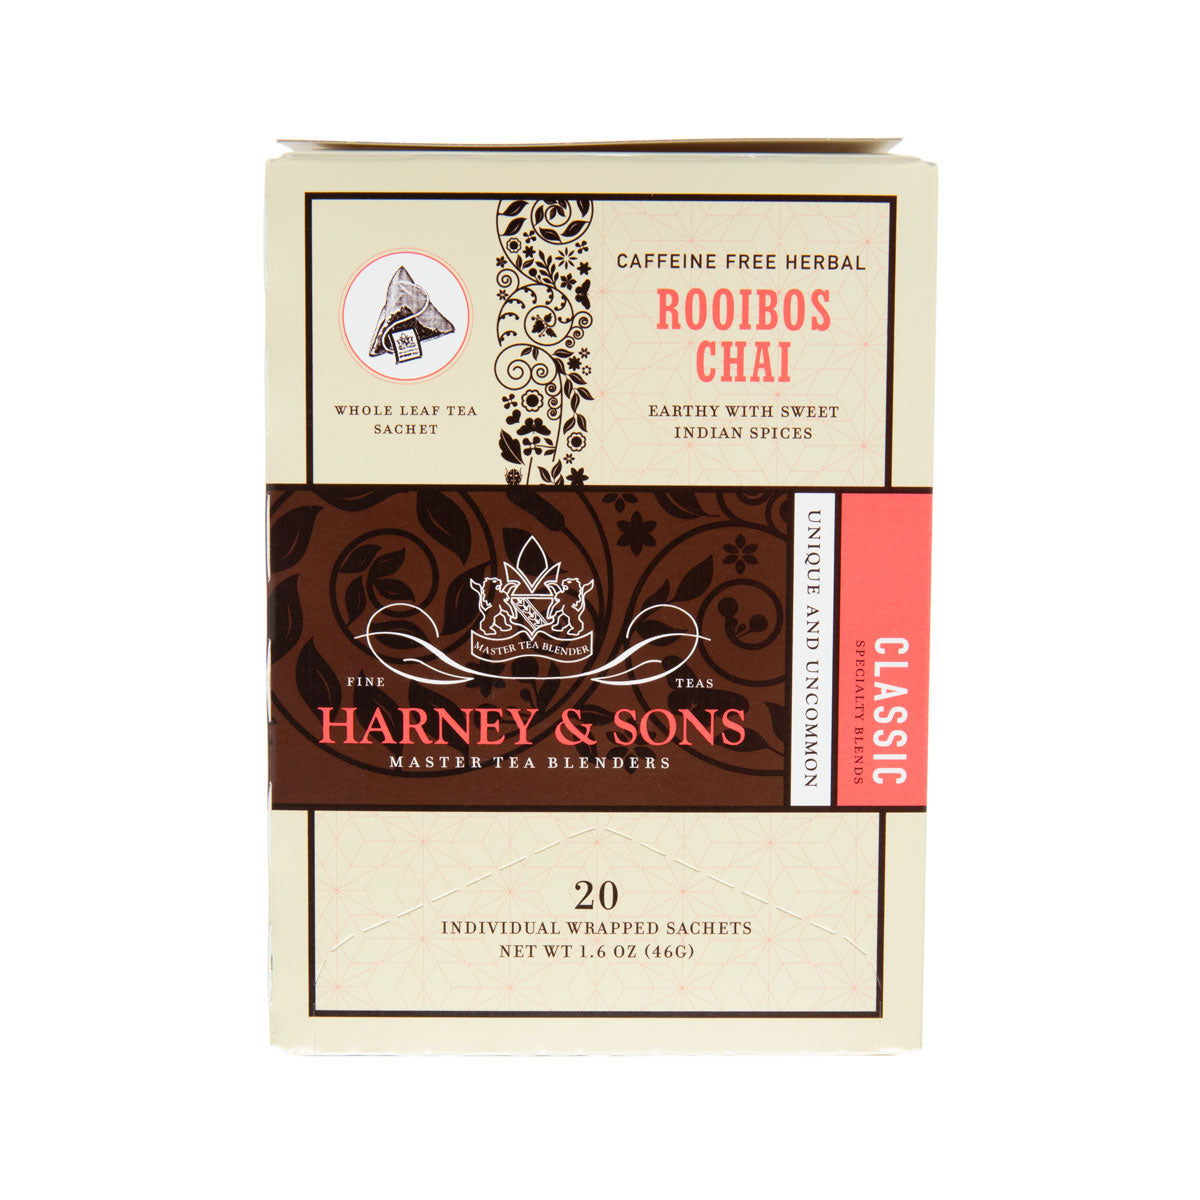 Harney & Sons Tea Chai Rooibos 20 Ct Bag - 6 Ct